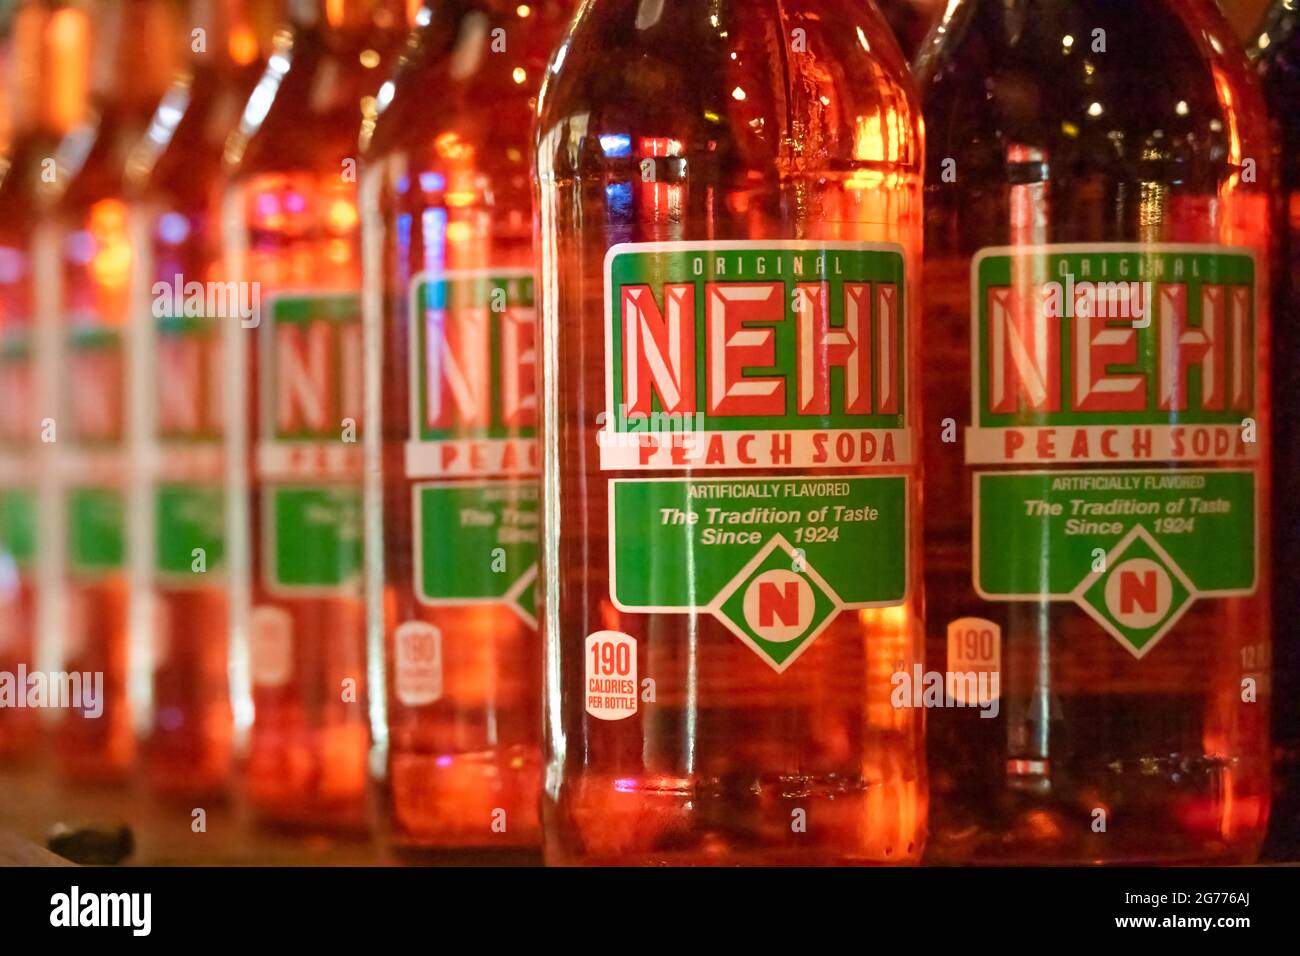 Nehi Peach Soda bottles at Betty's Country store in Helen, Georgia. (USA) Stock Photo